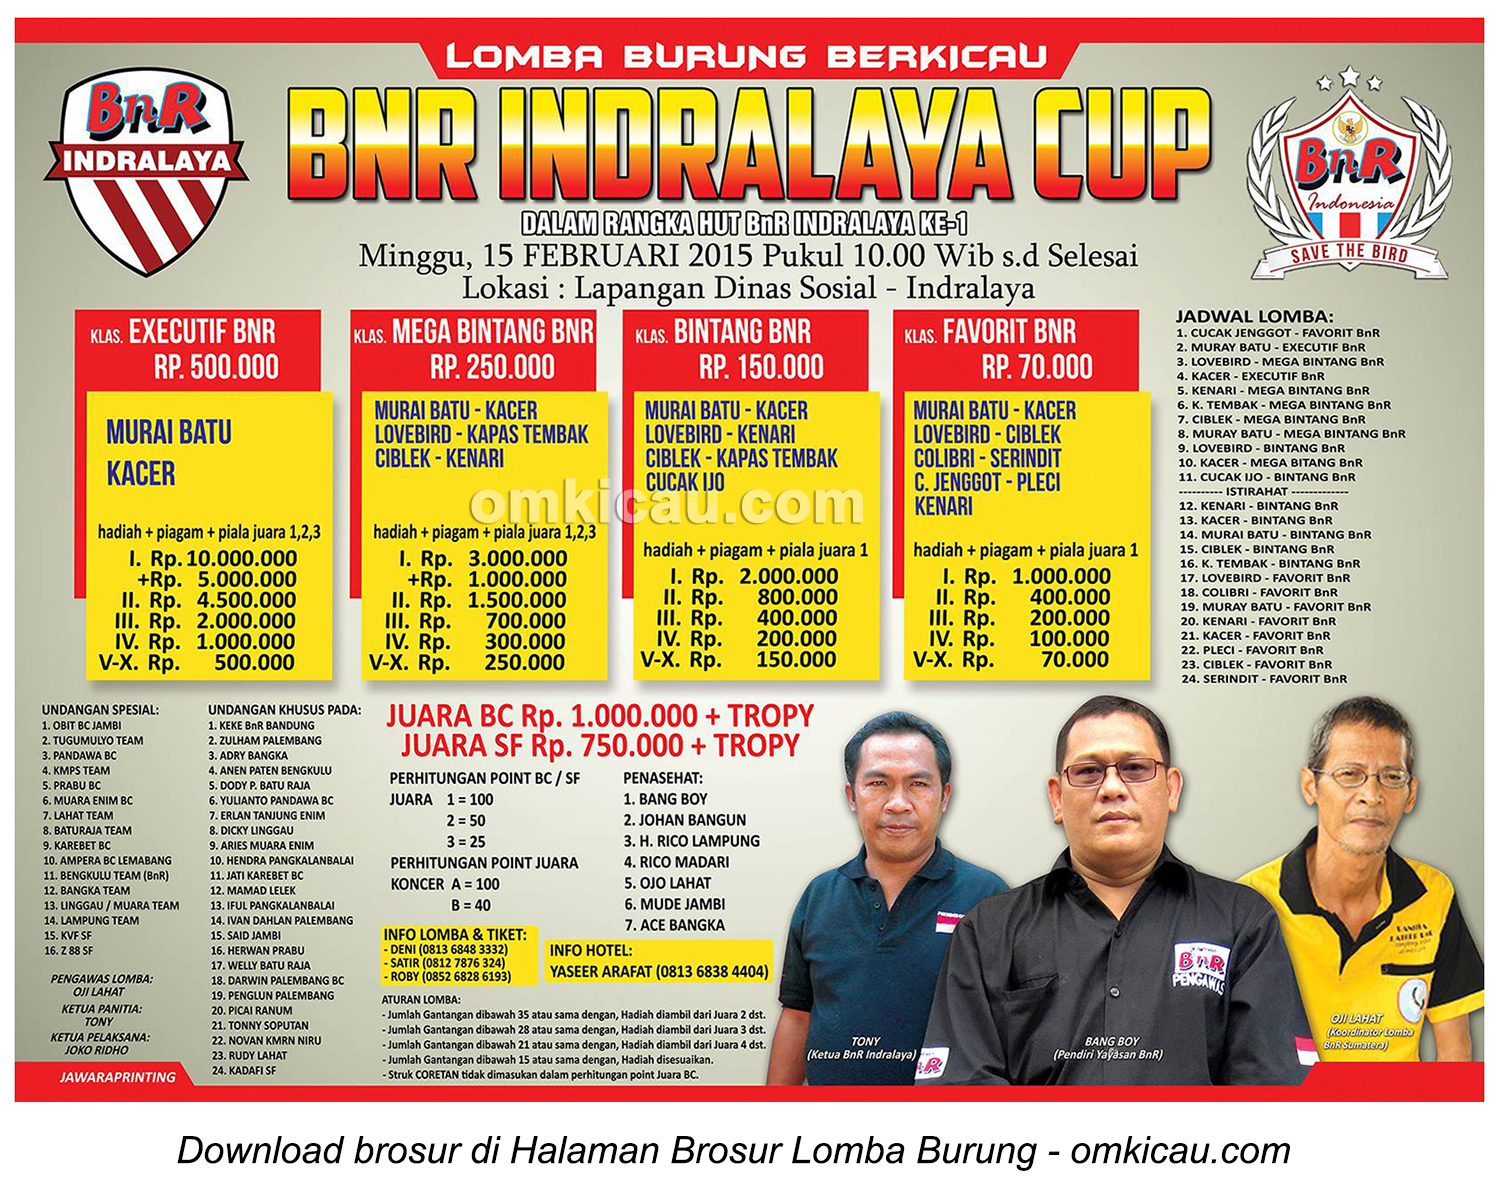 Brosur Lomba Burung Berkicau BnR Indralaya Cup, Ogan Ilir, 15 Februari 2015